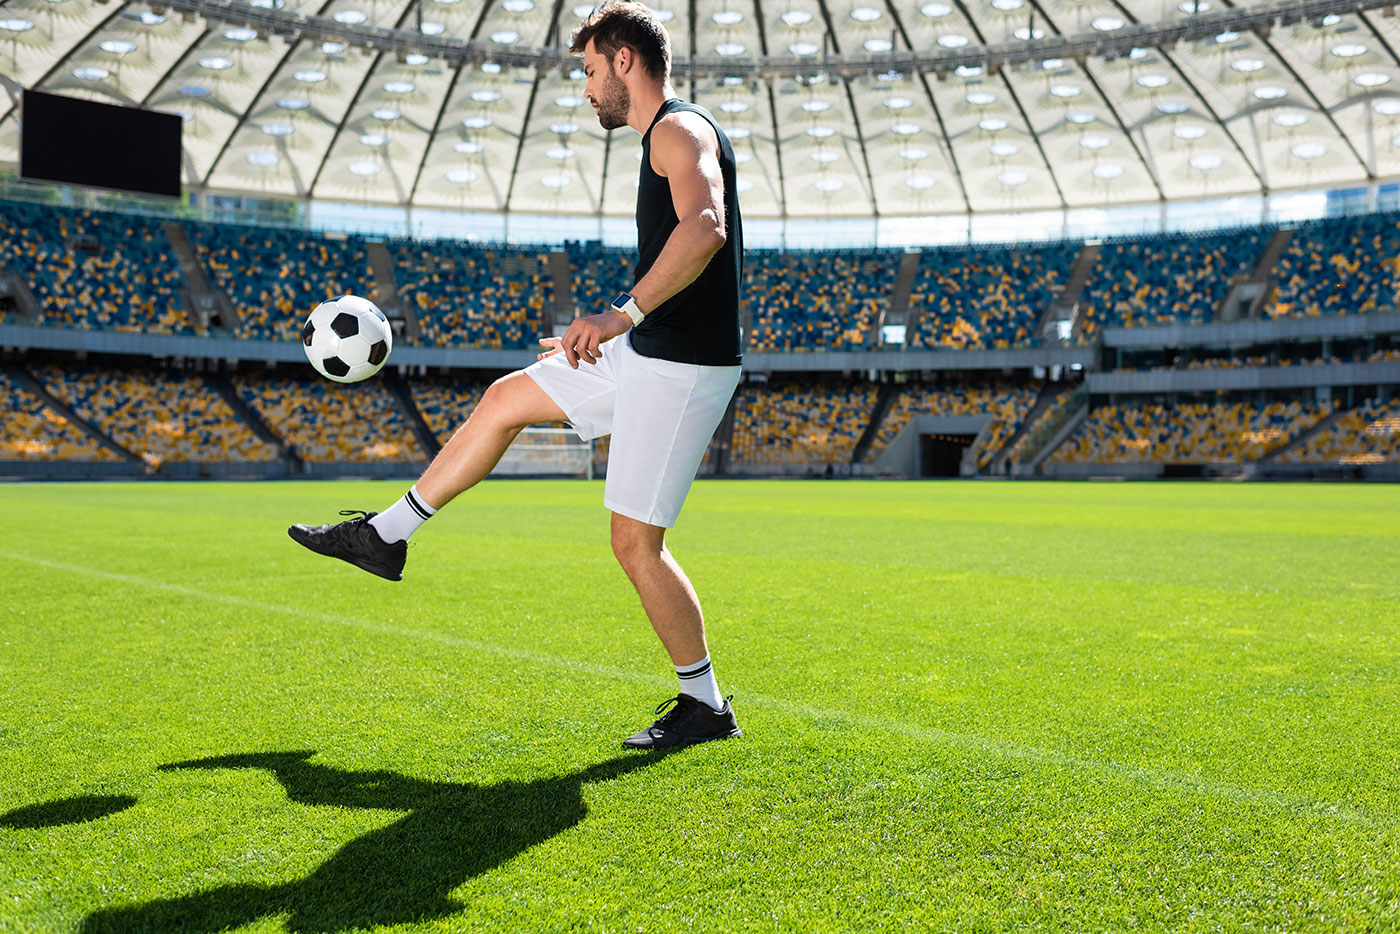 Bouncing soccer ball or football on leg